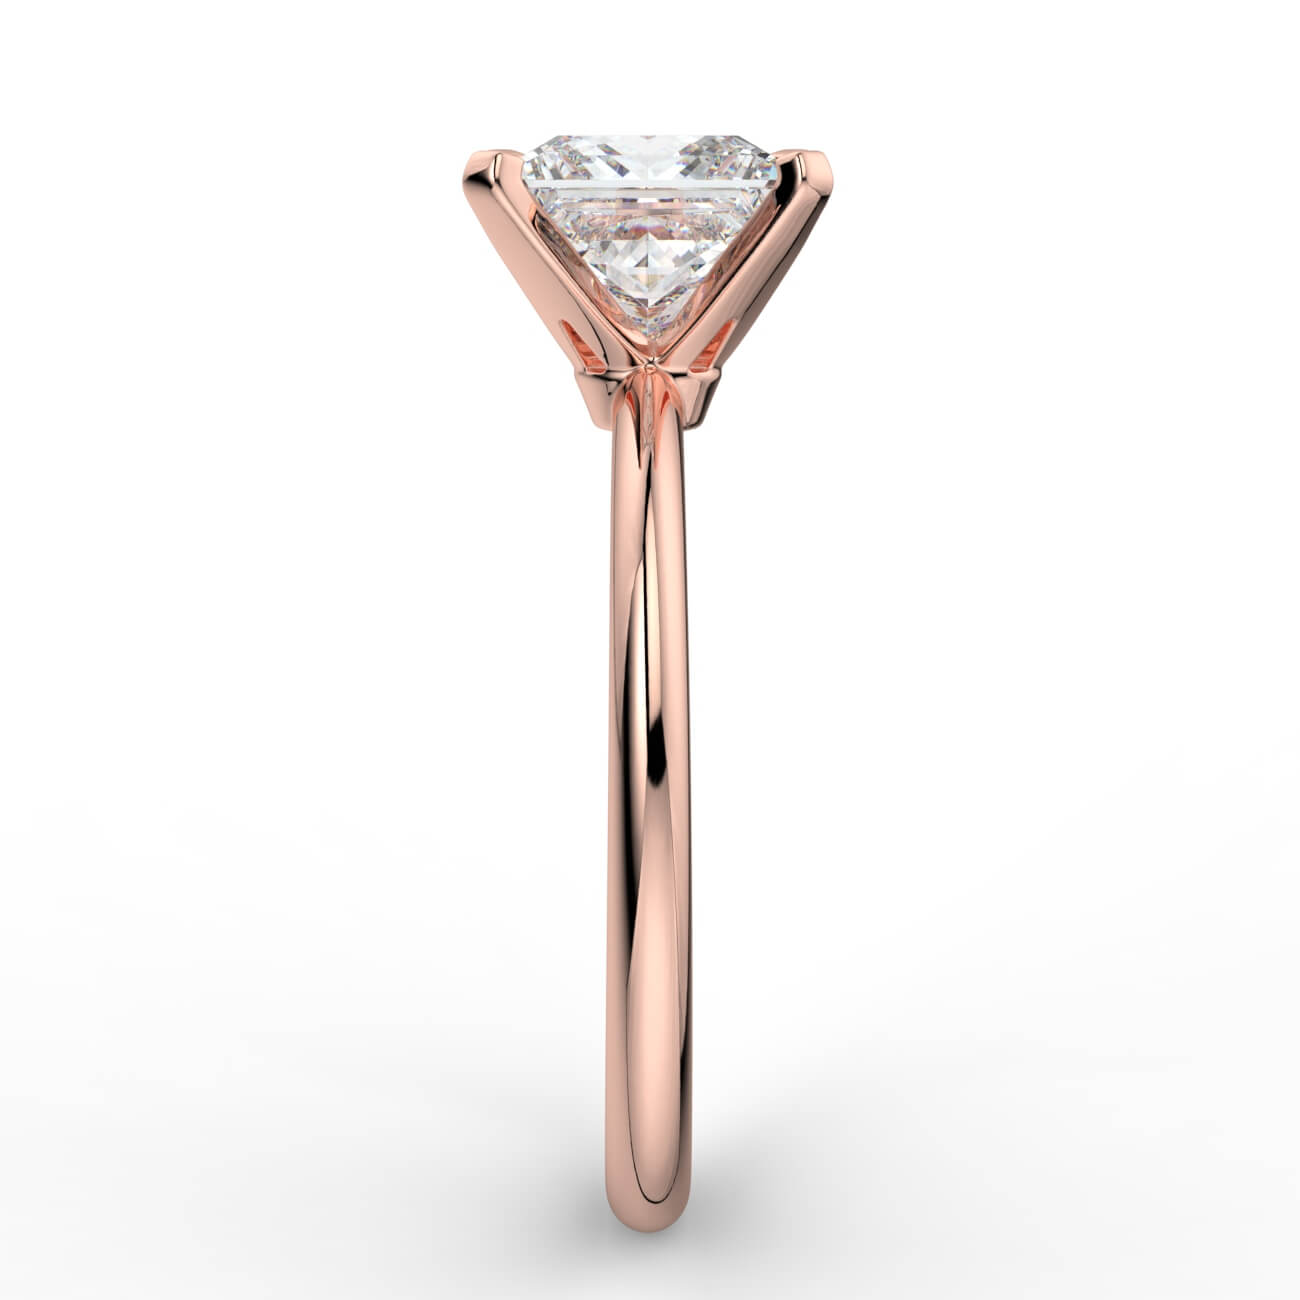 Knife-edge solitaire princess cut diamond engagement ring in rose gold – Australian Diamond Network